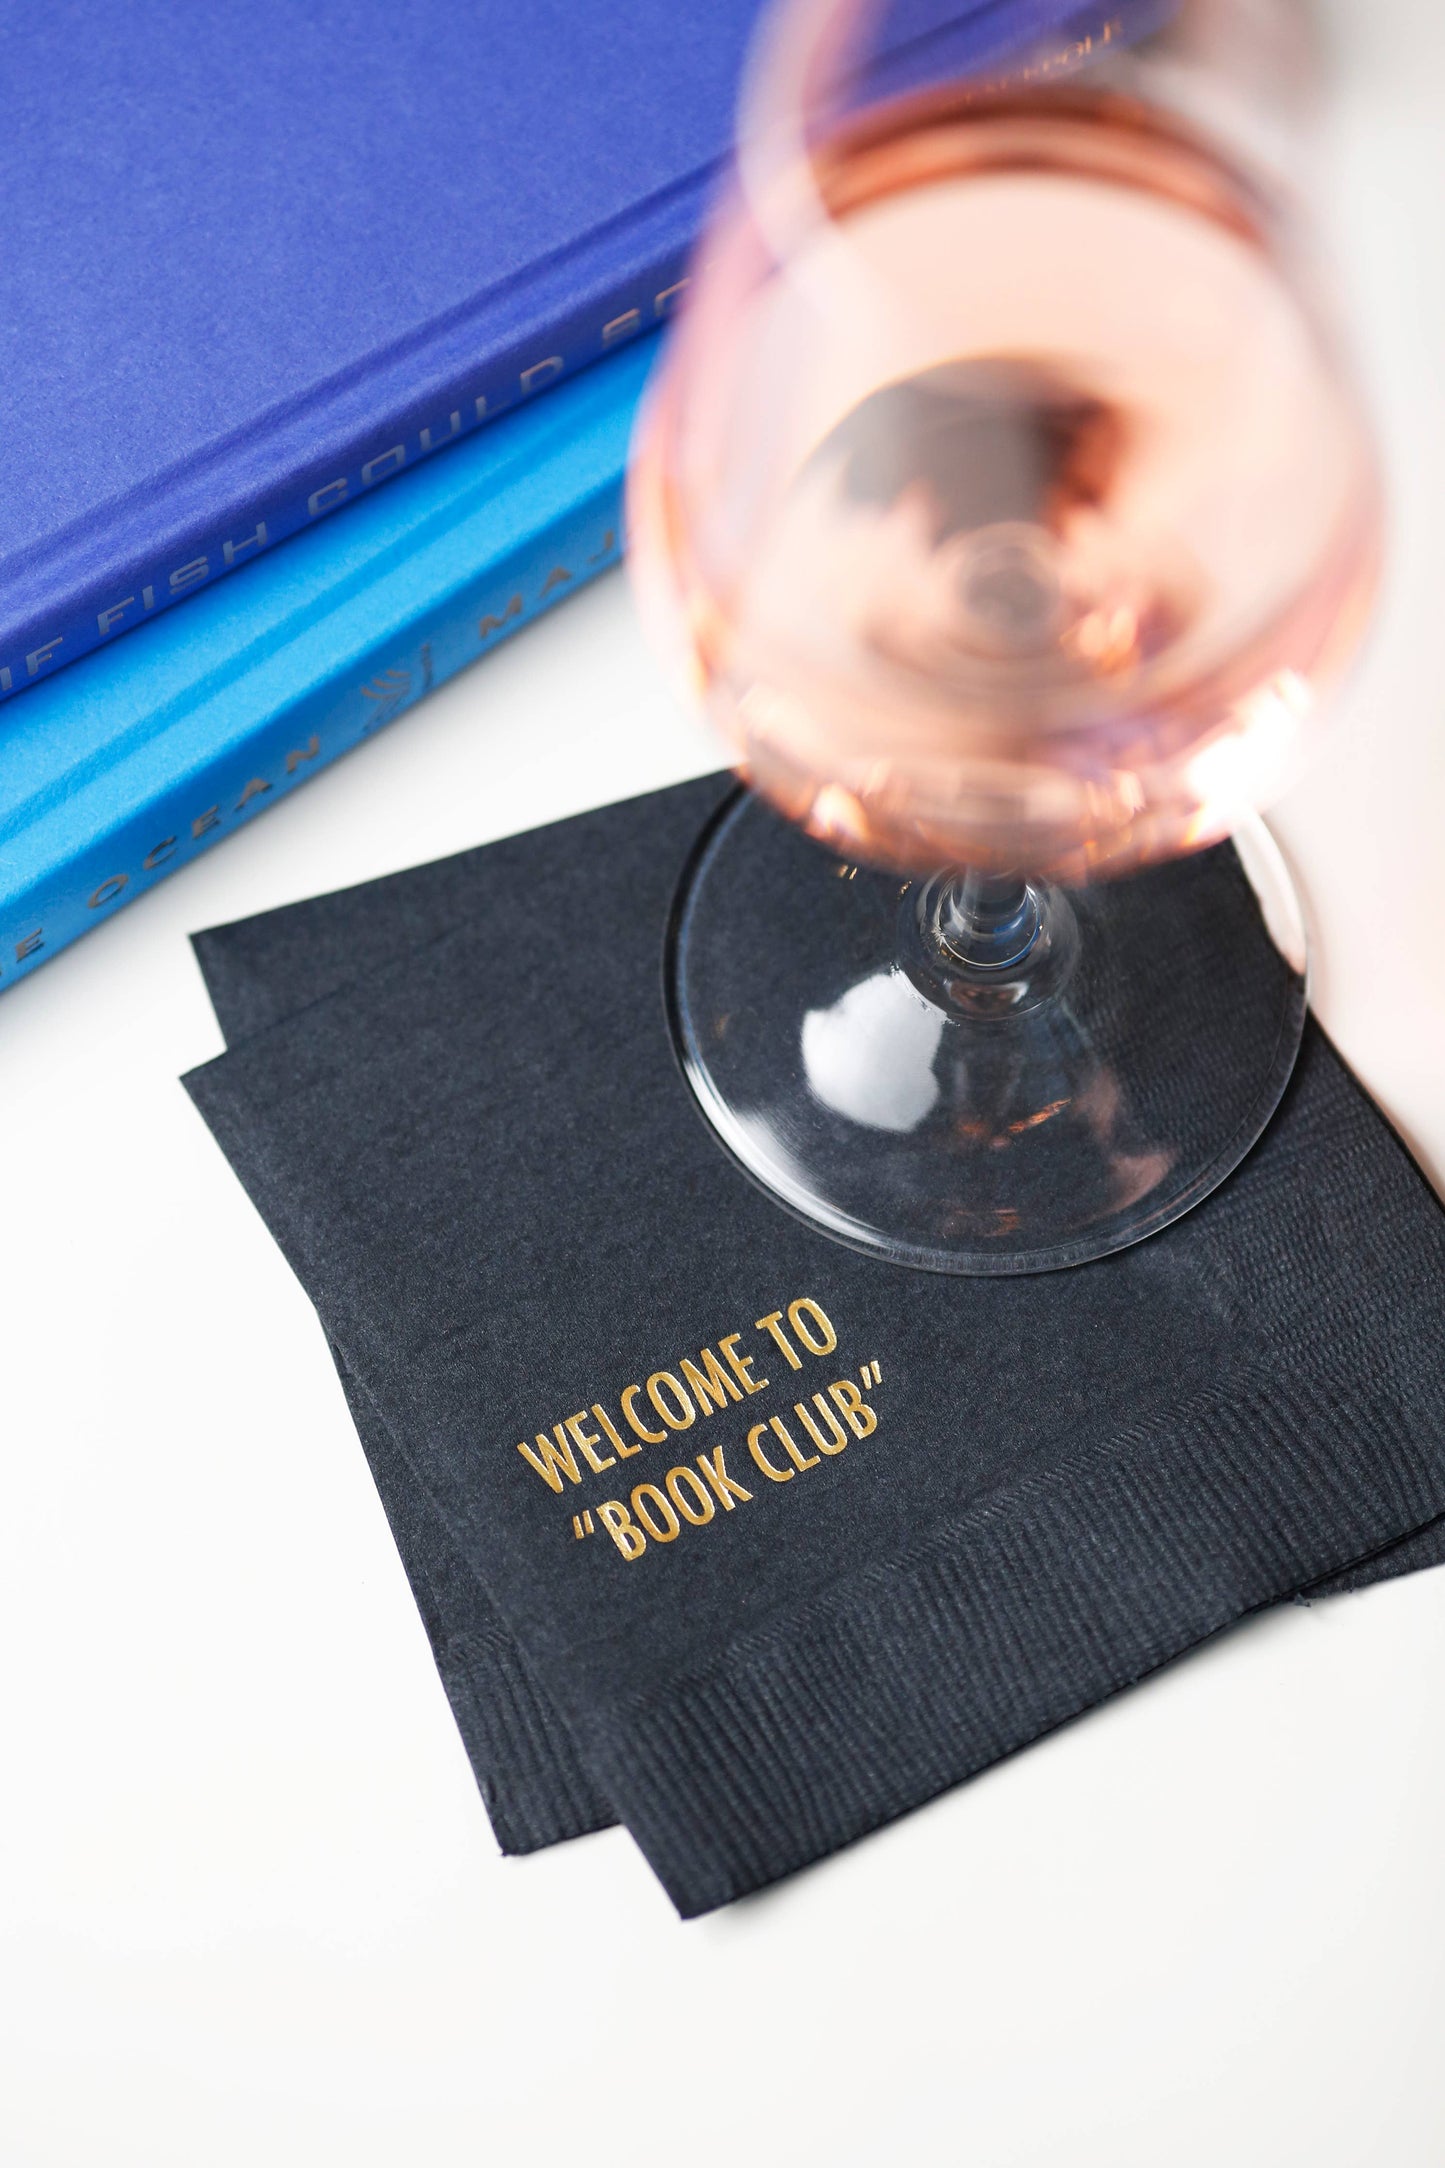 Book Club Cocktail Napkin